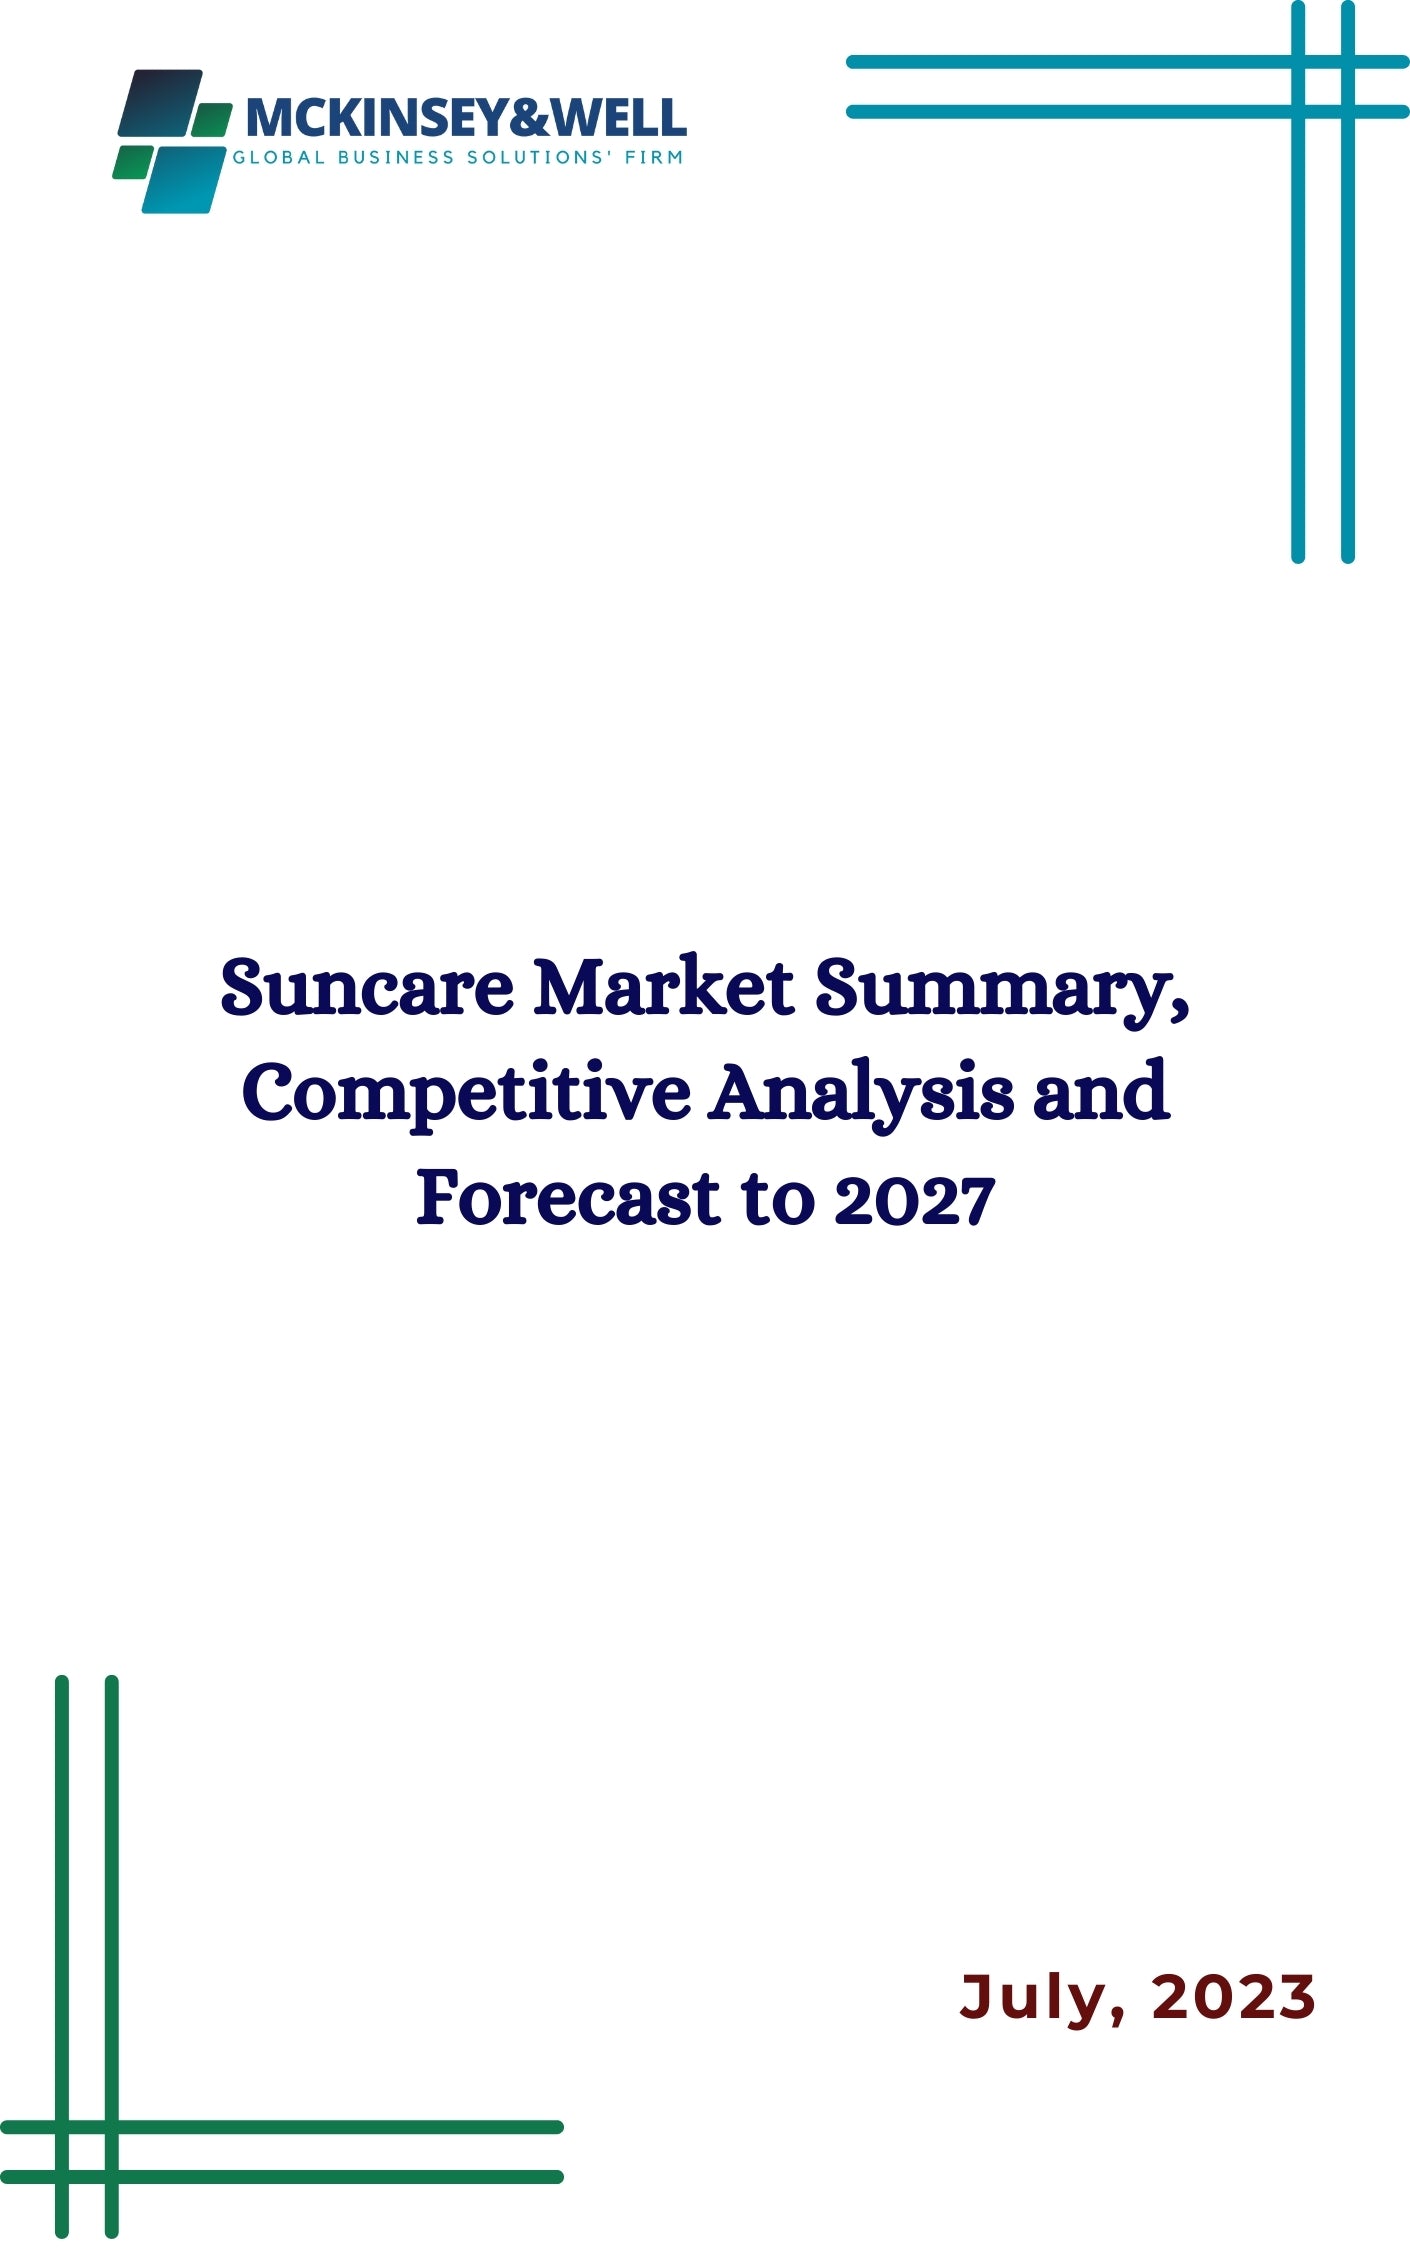 Suncare Market Summary, Competitive Analysis and Forecast to 2027